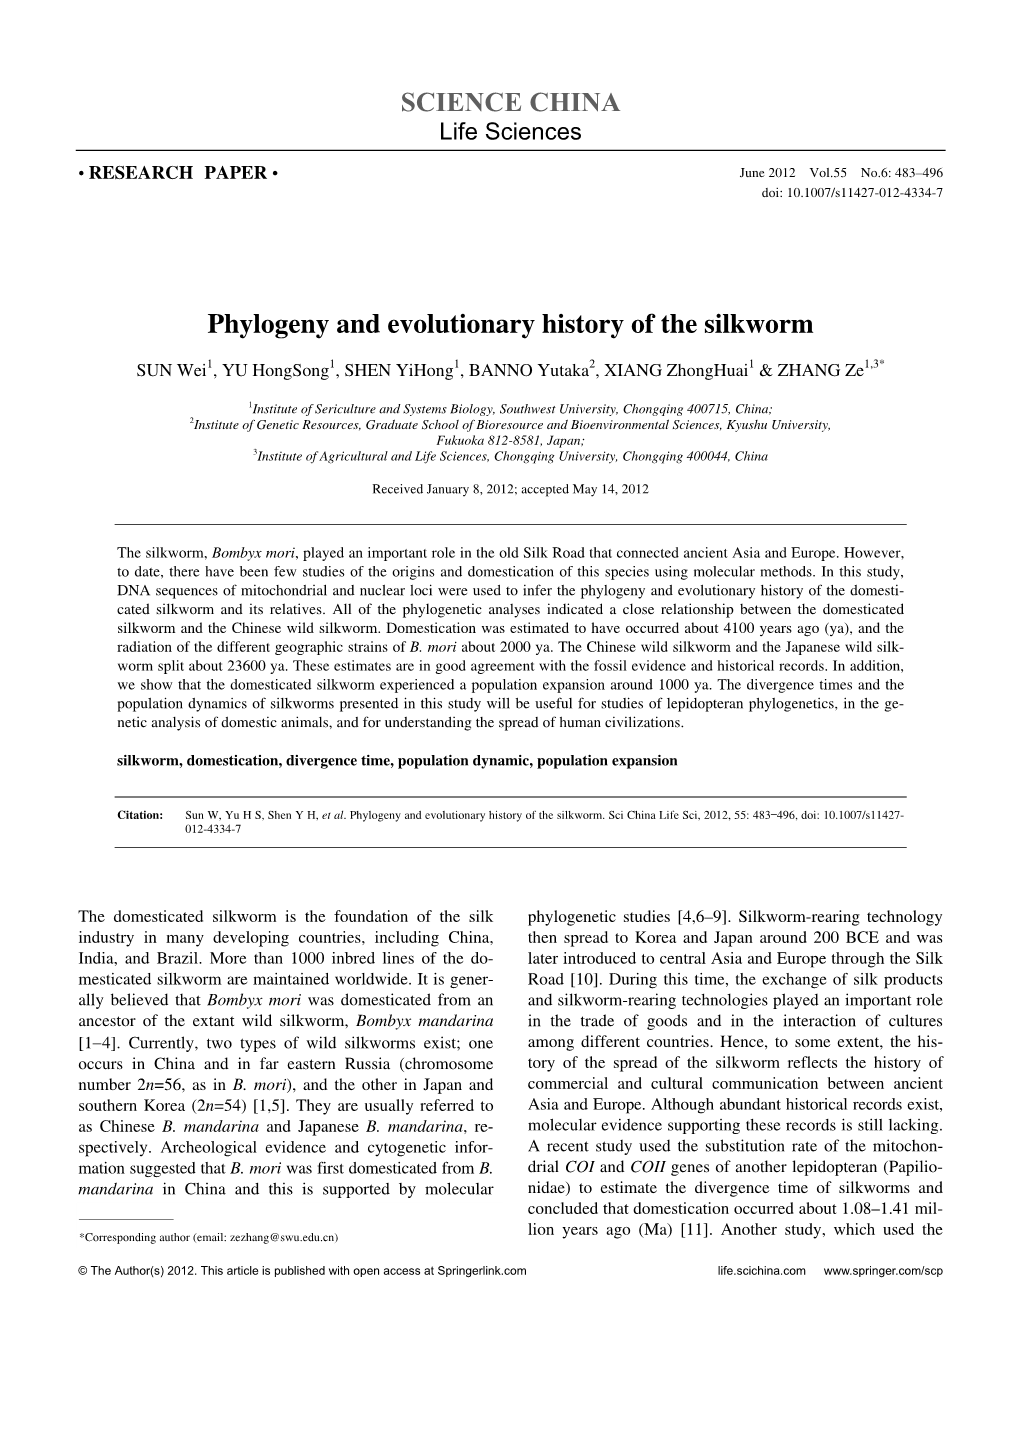 SCIENCE CHINA Phylogeny and Evolutionary History of the Silkworm